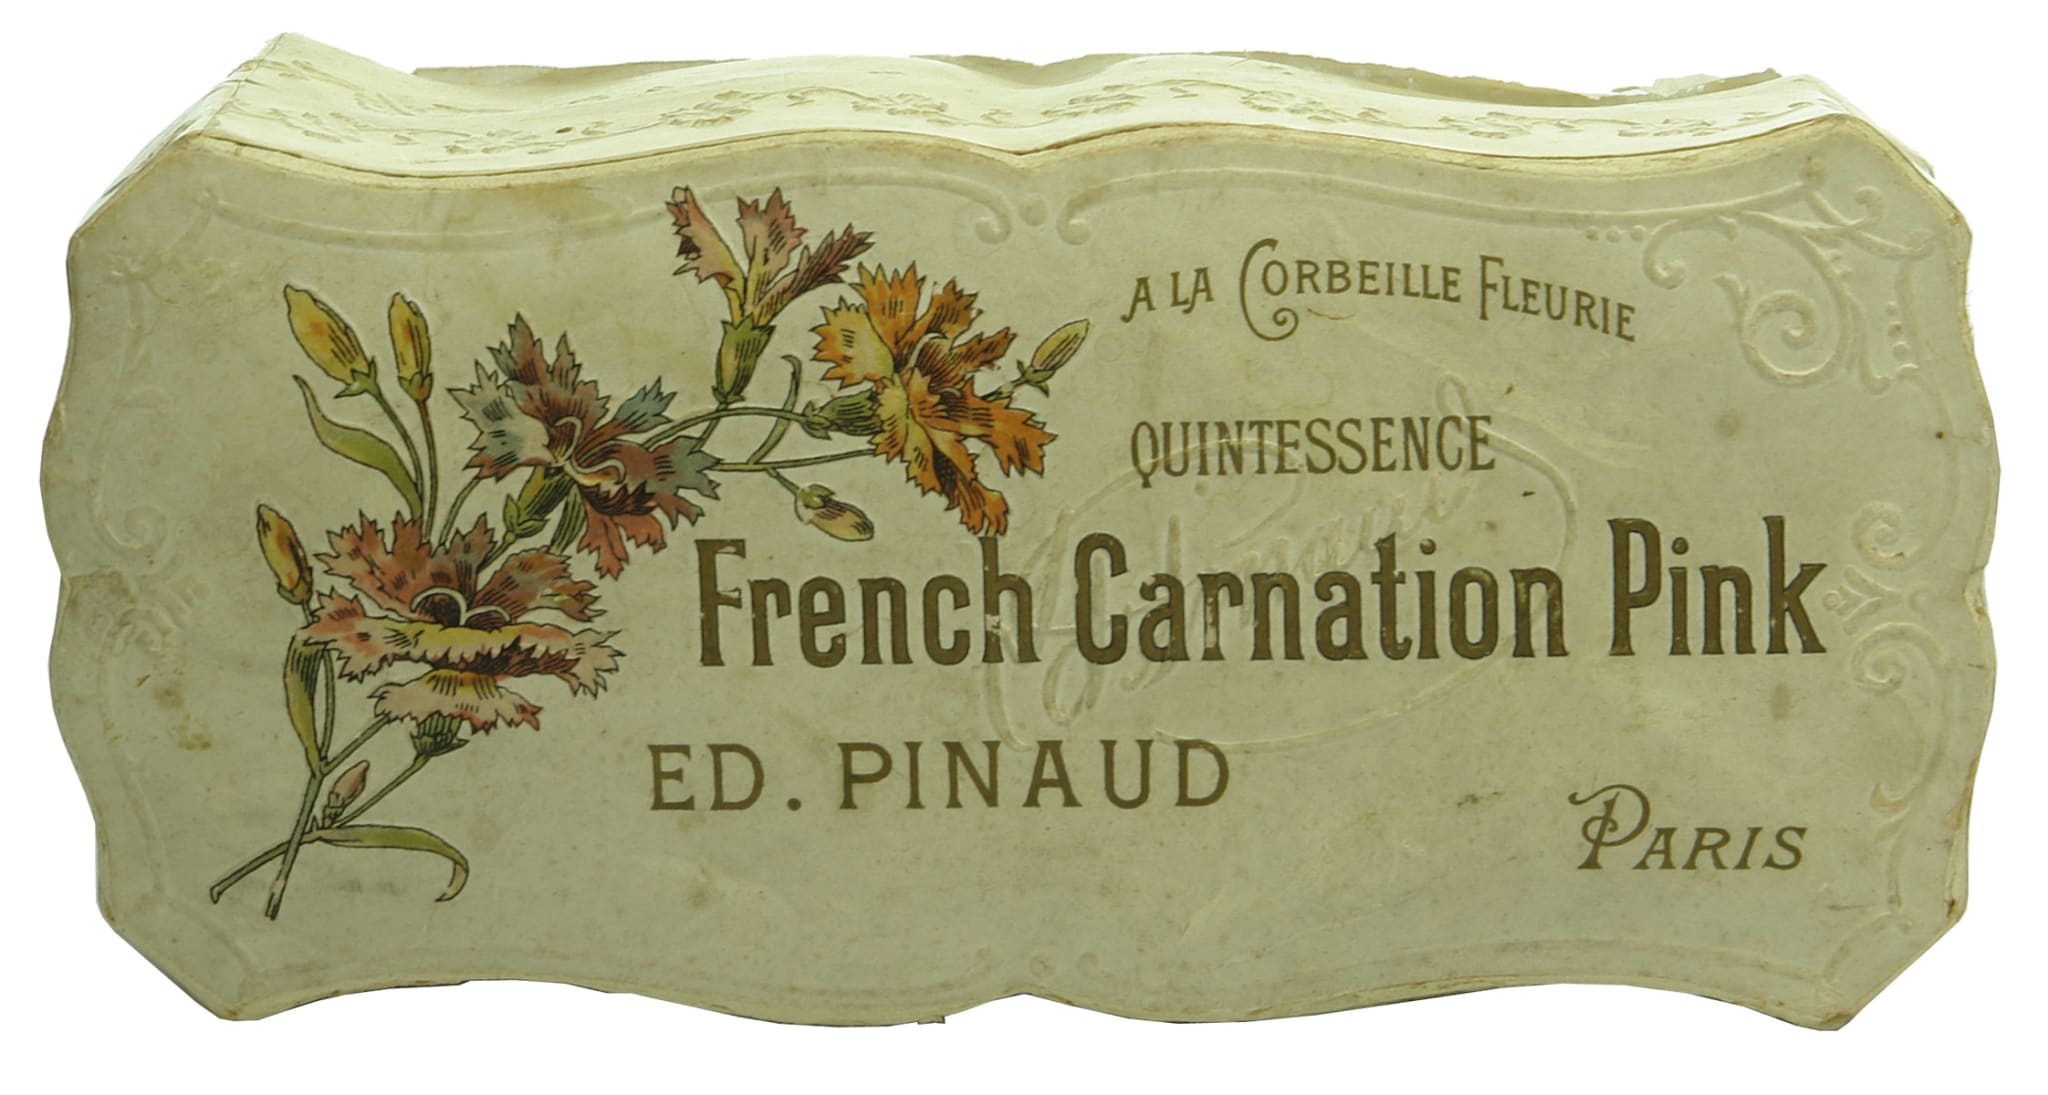 Corbeille Fleurie Quintessence Pinaud Paris Perfume Bottle